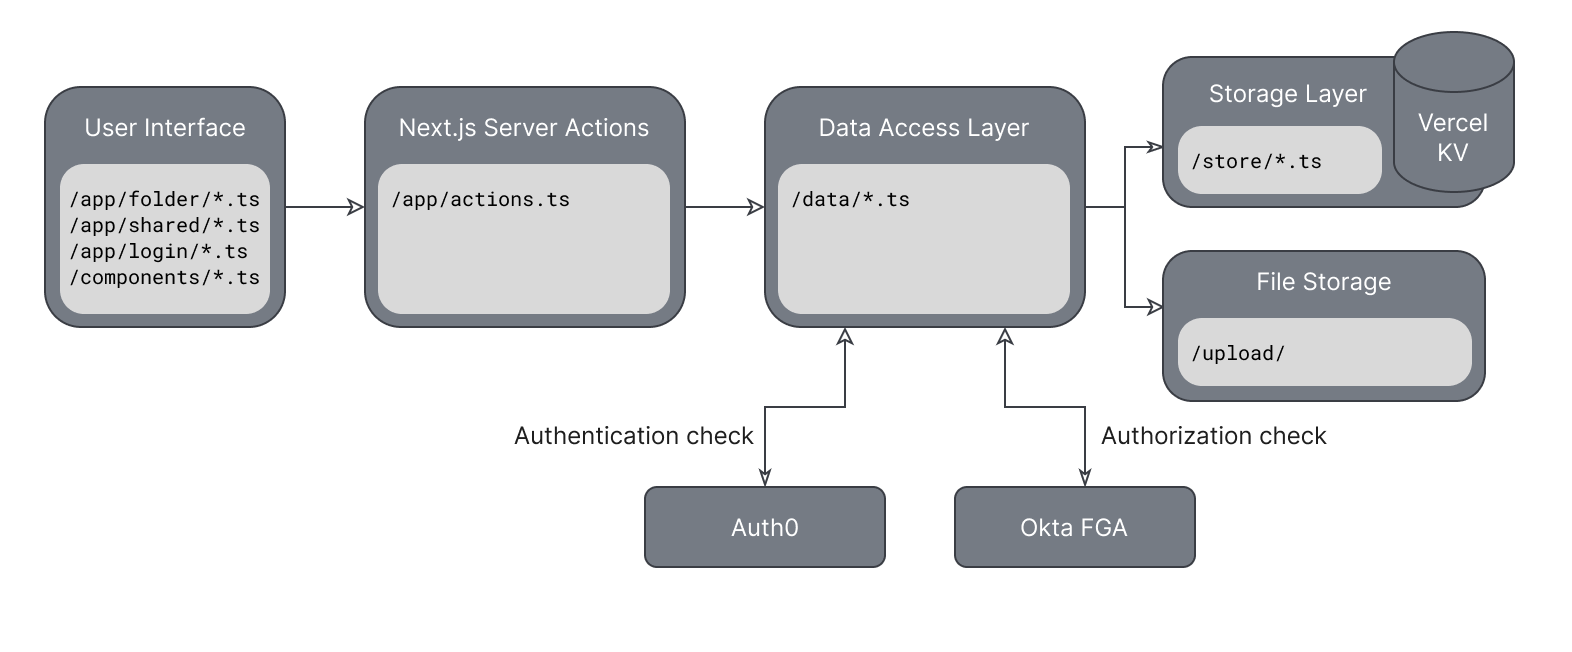 The demo application architecture